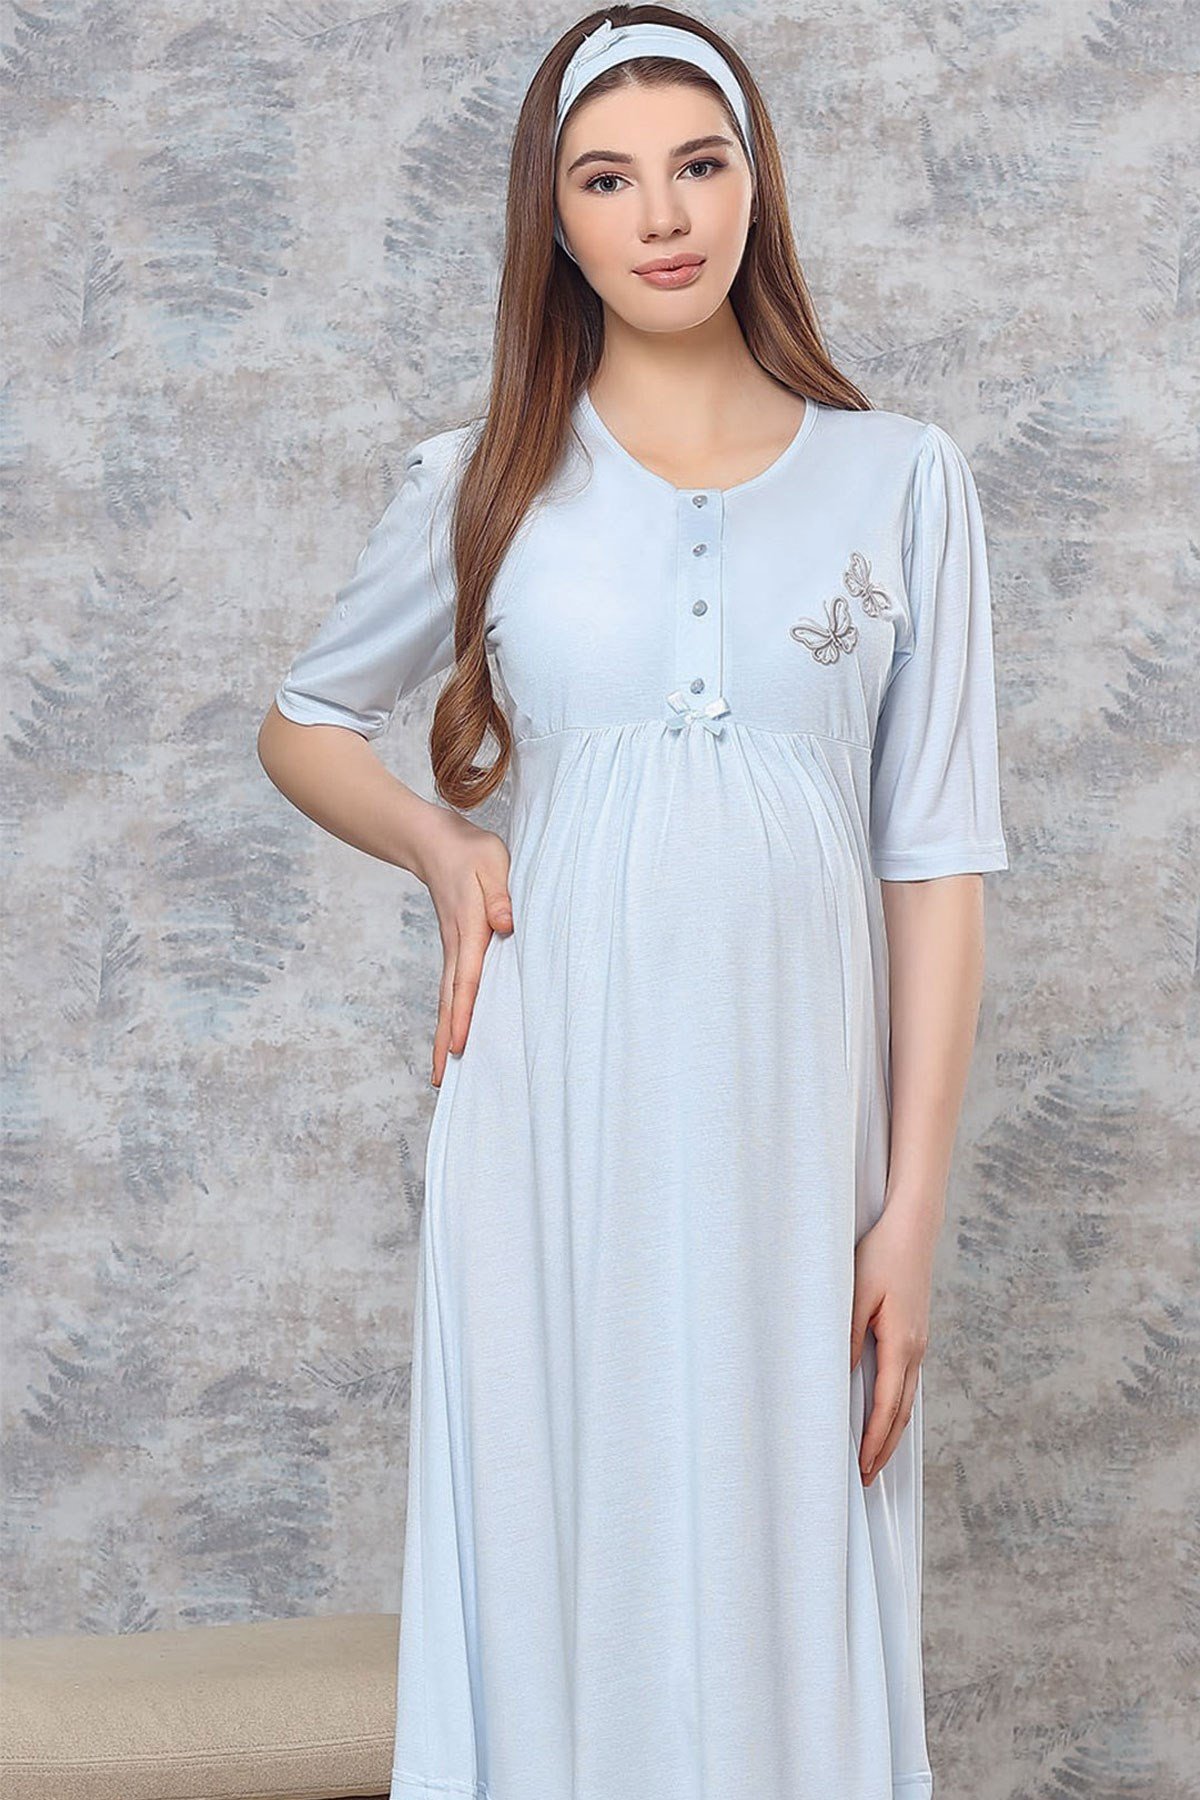 Haluk Bayram 4122 Lace Embroidered Maternity Nursing Nightgown Set